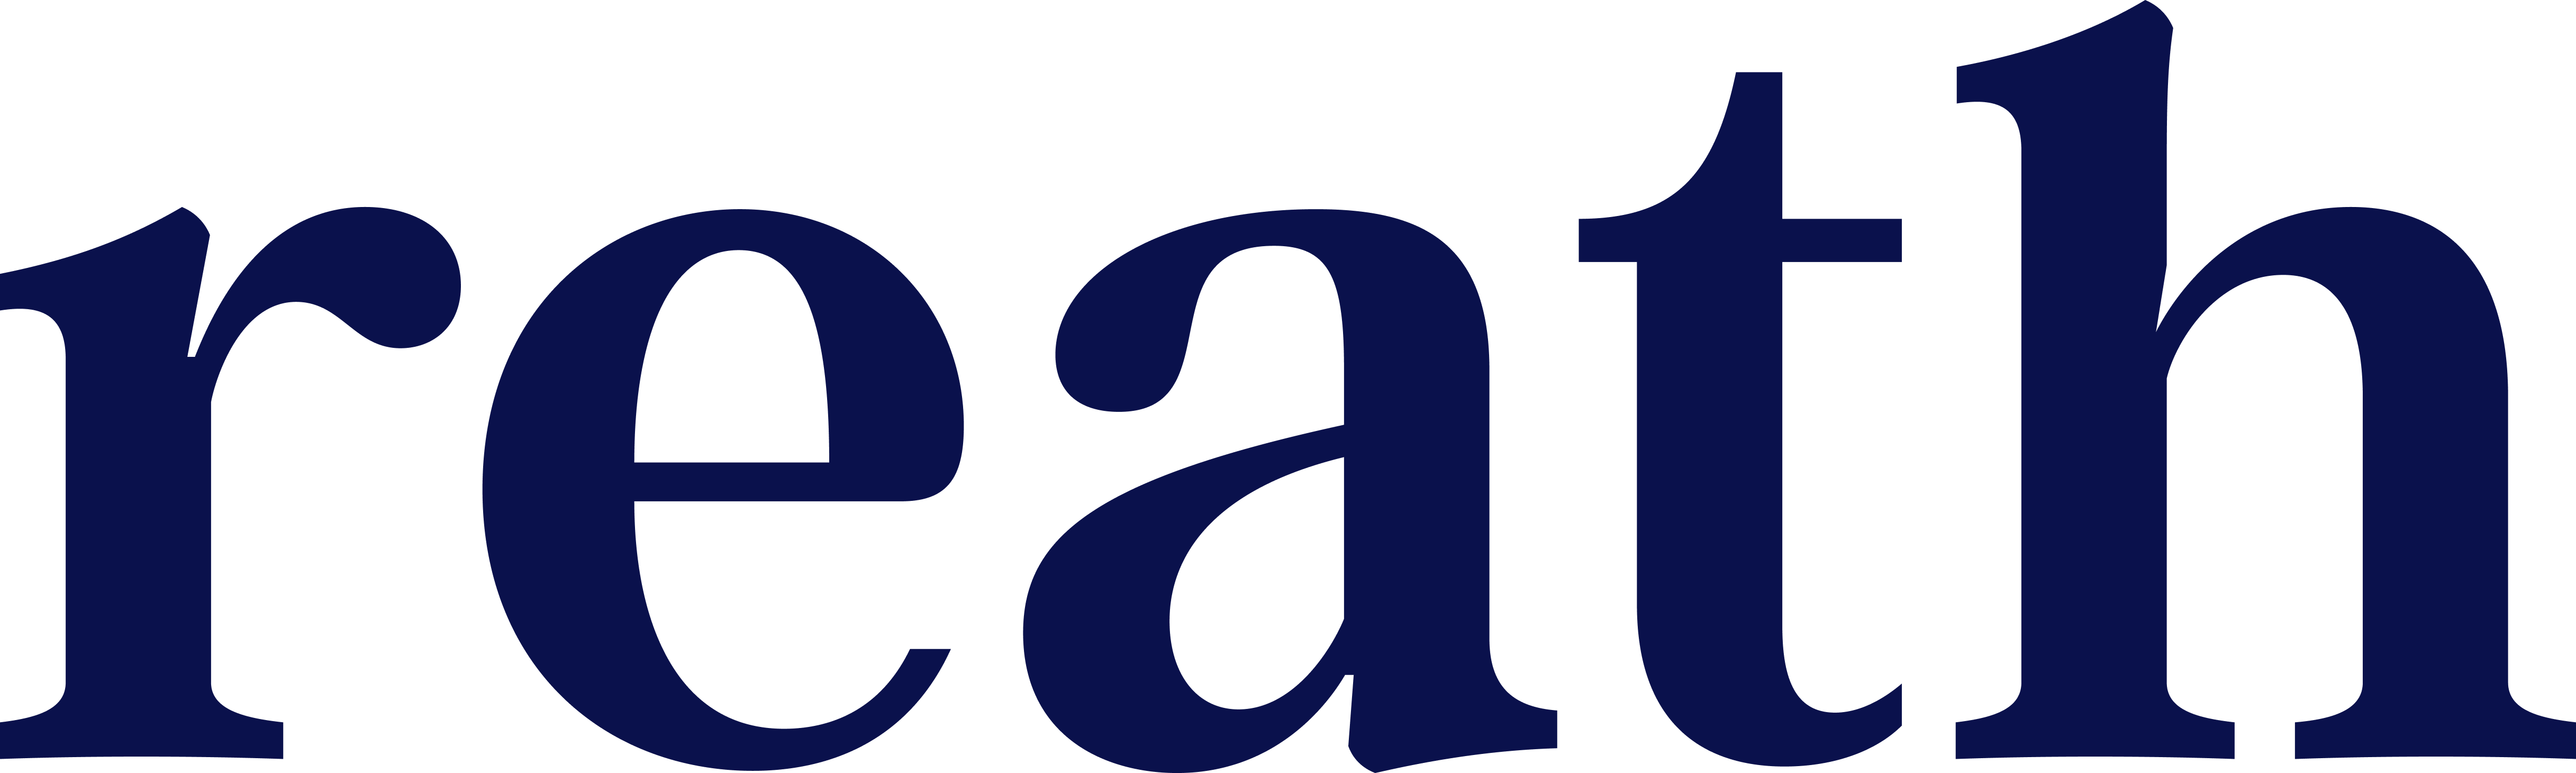 Reath Technology, Ltd